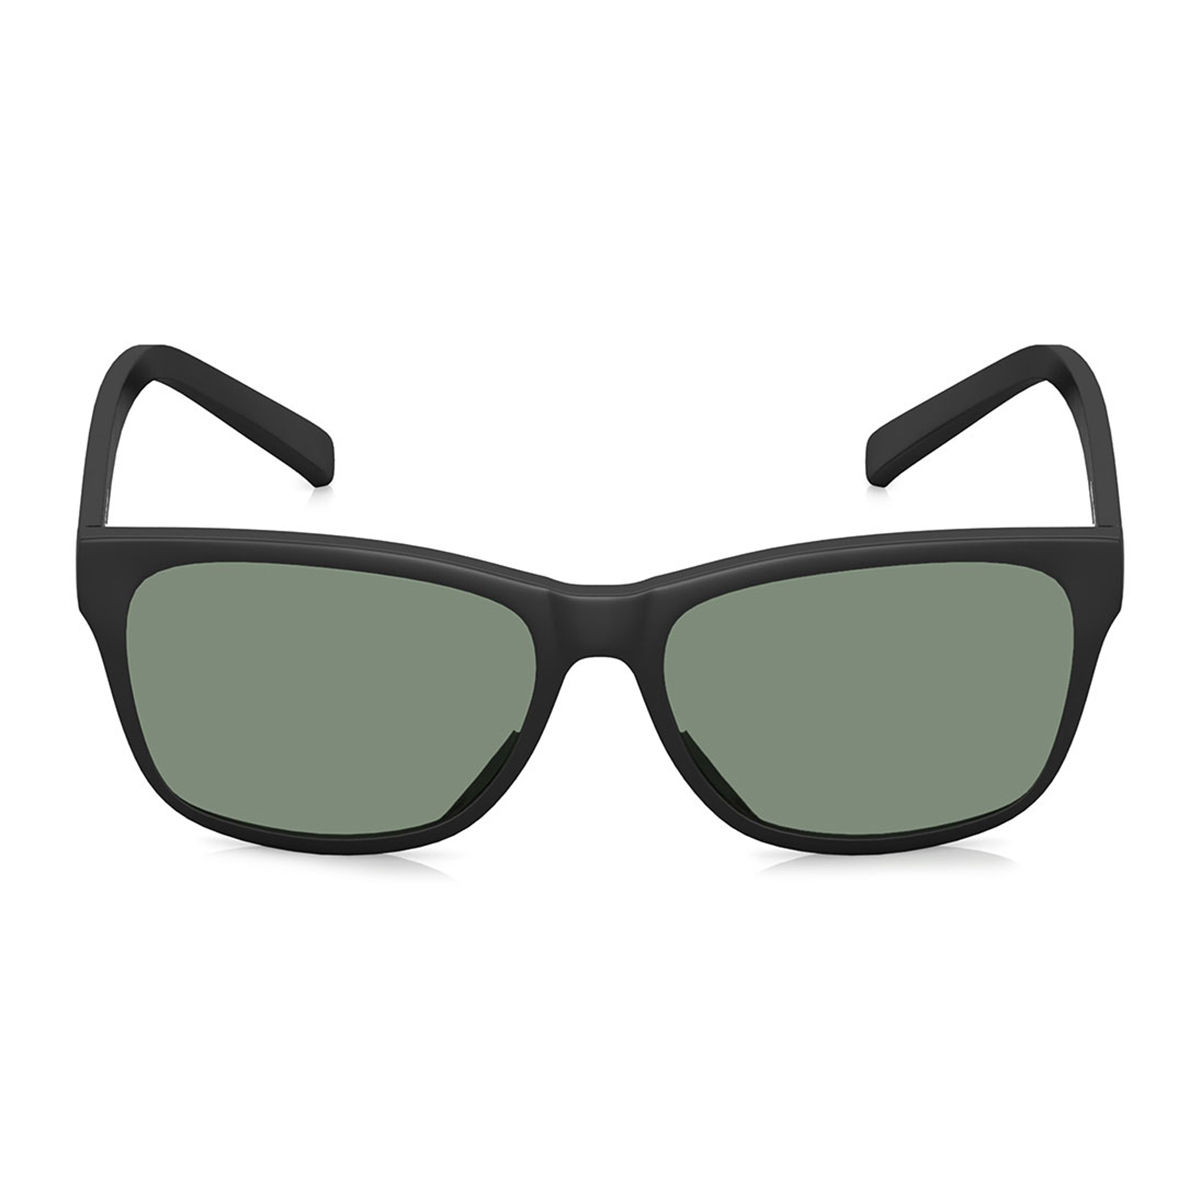 Buy Fastrack Men's 100% UV protected Green Lens Square Sunglasses at  Amazon.in